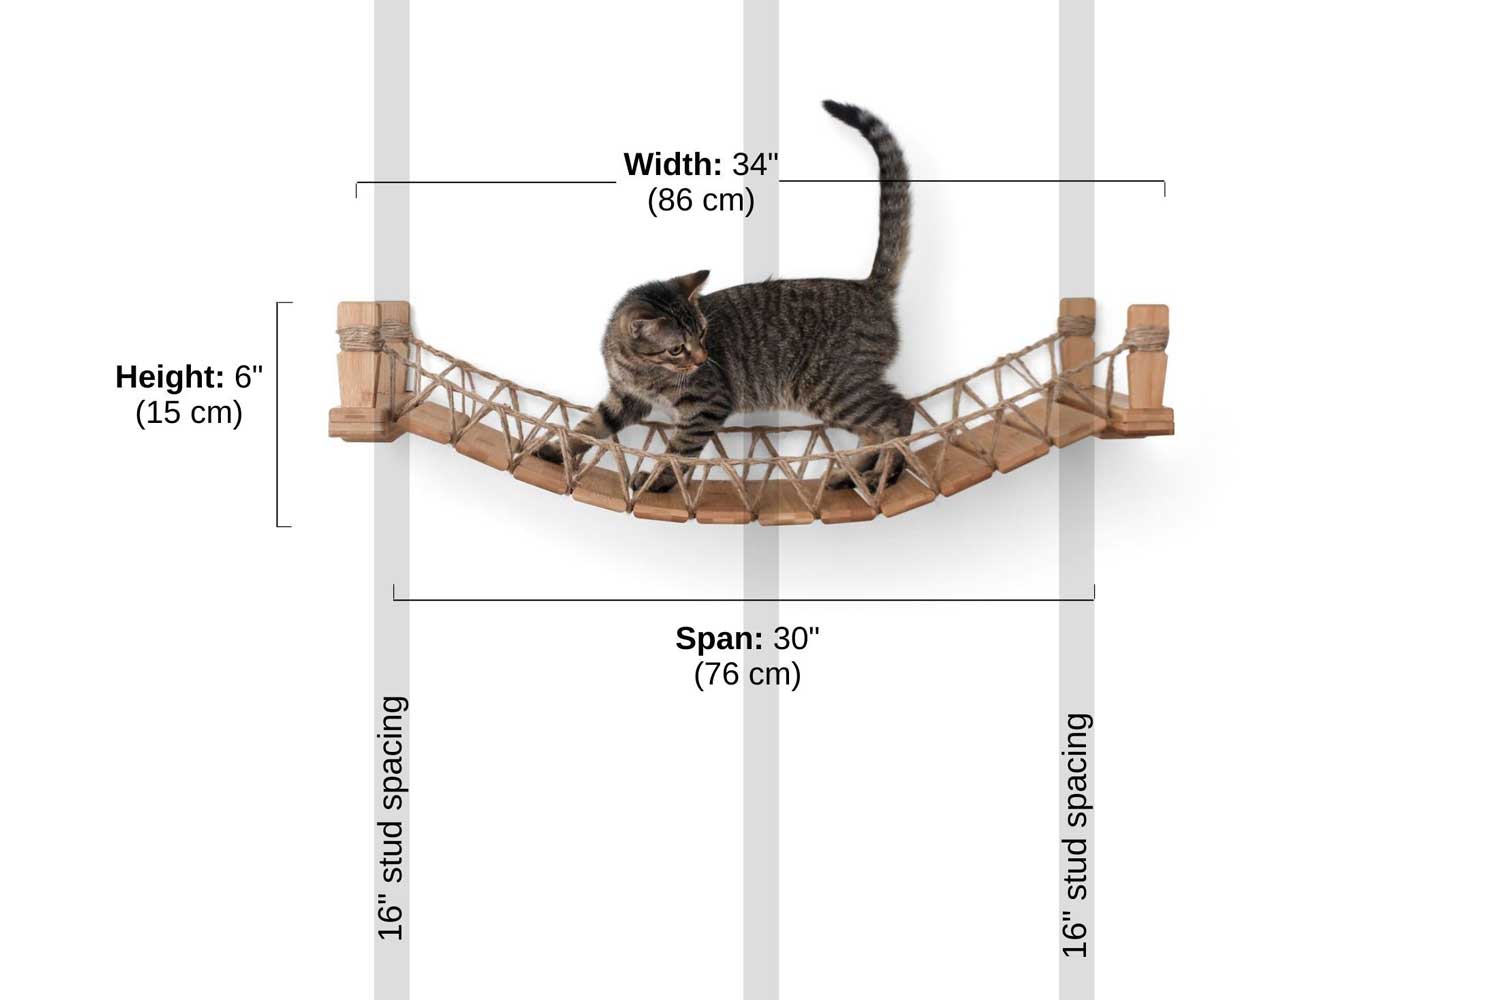 Measurements of 34-Inch Cat Bridge